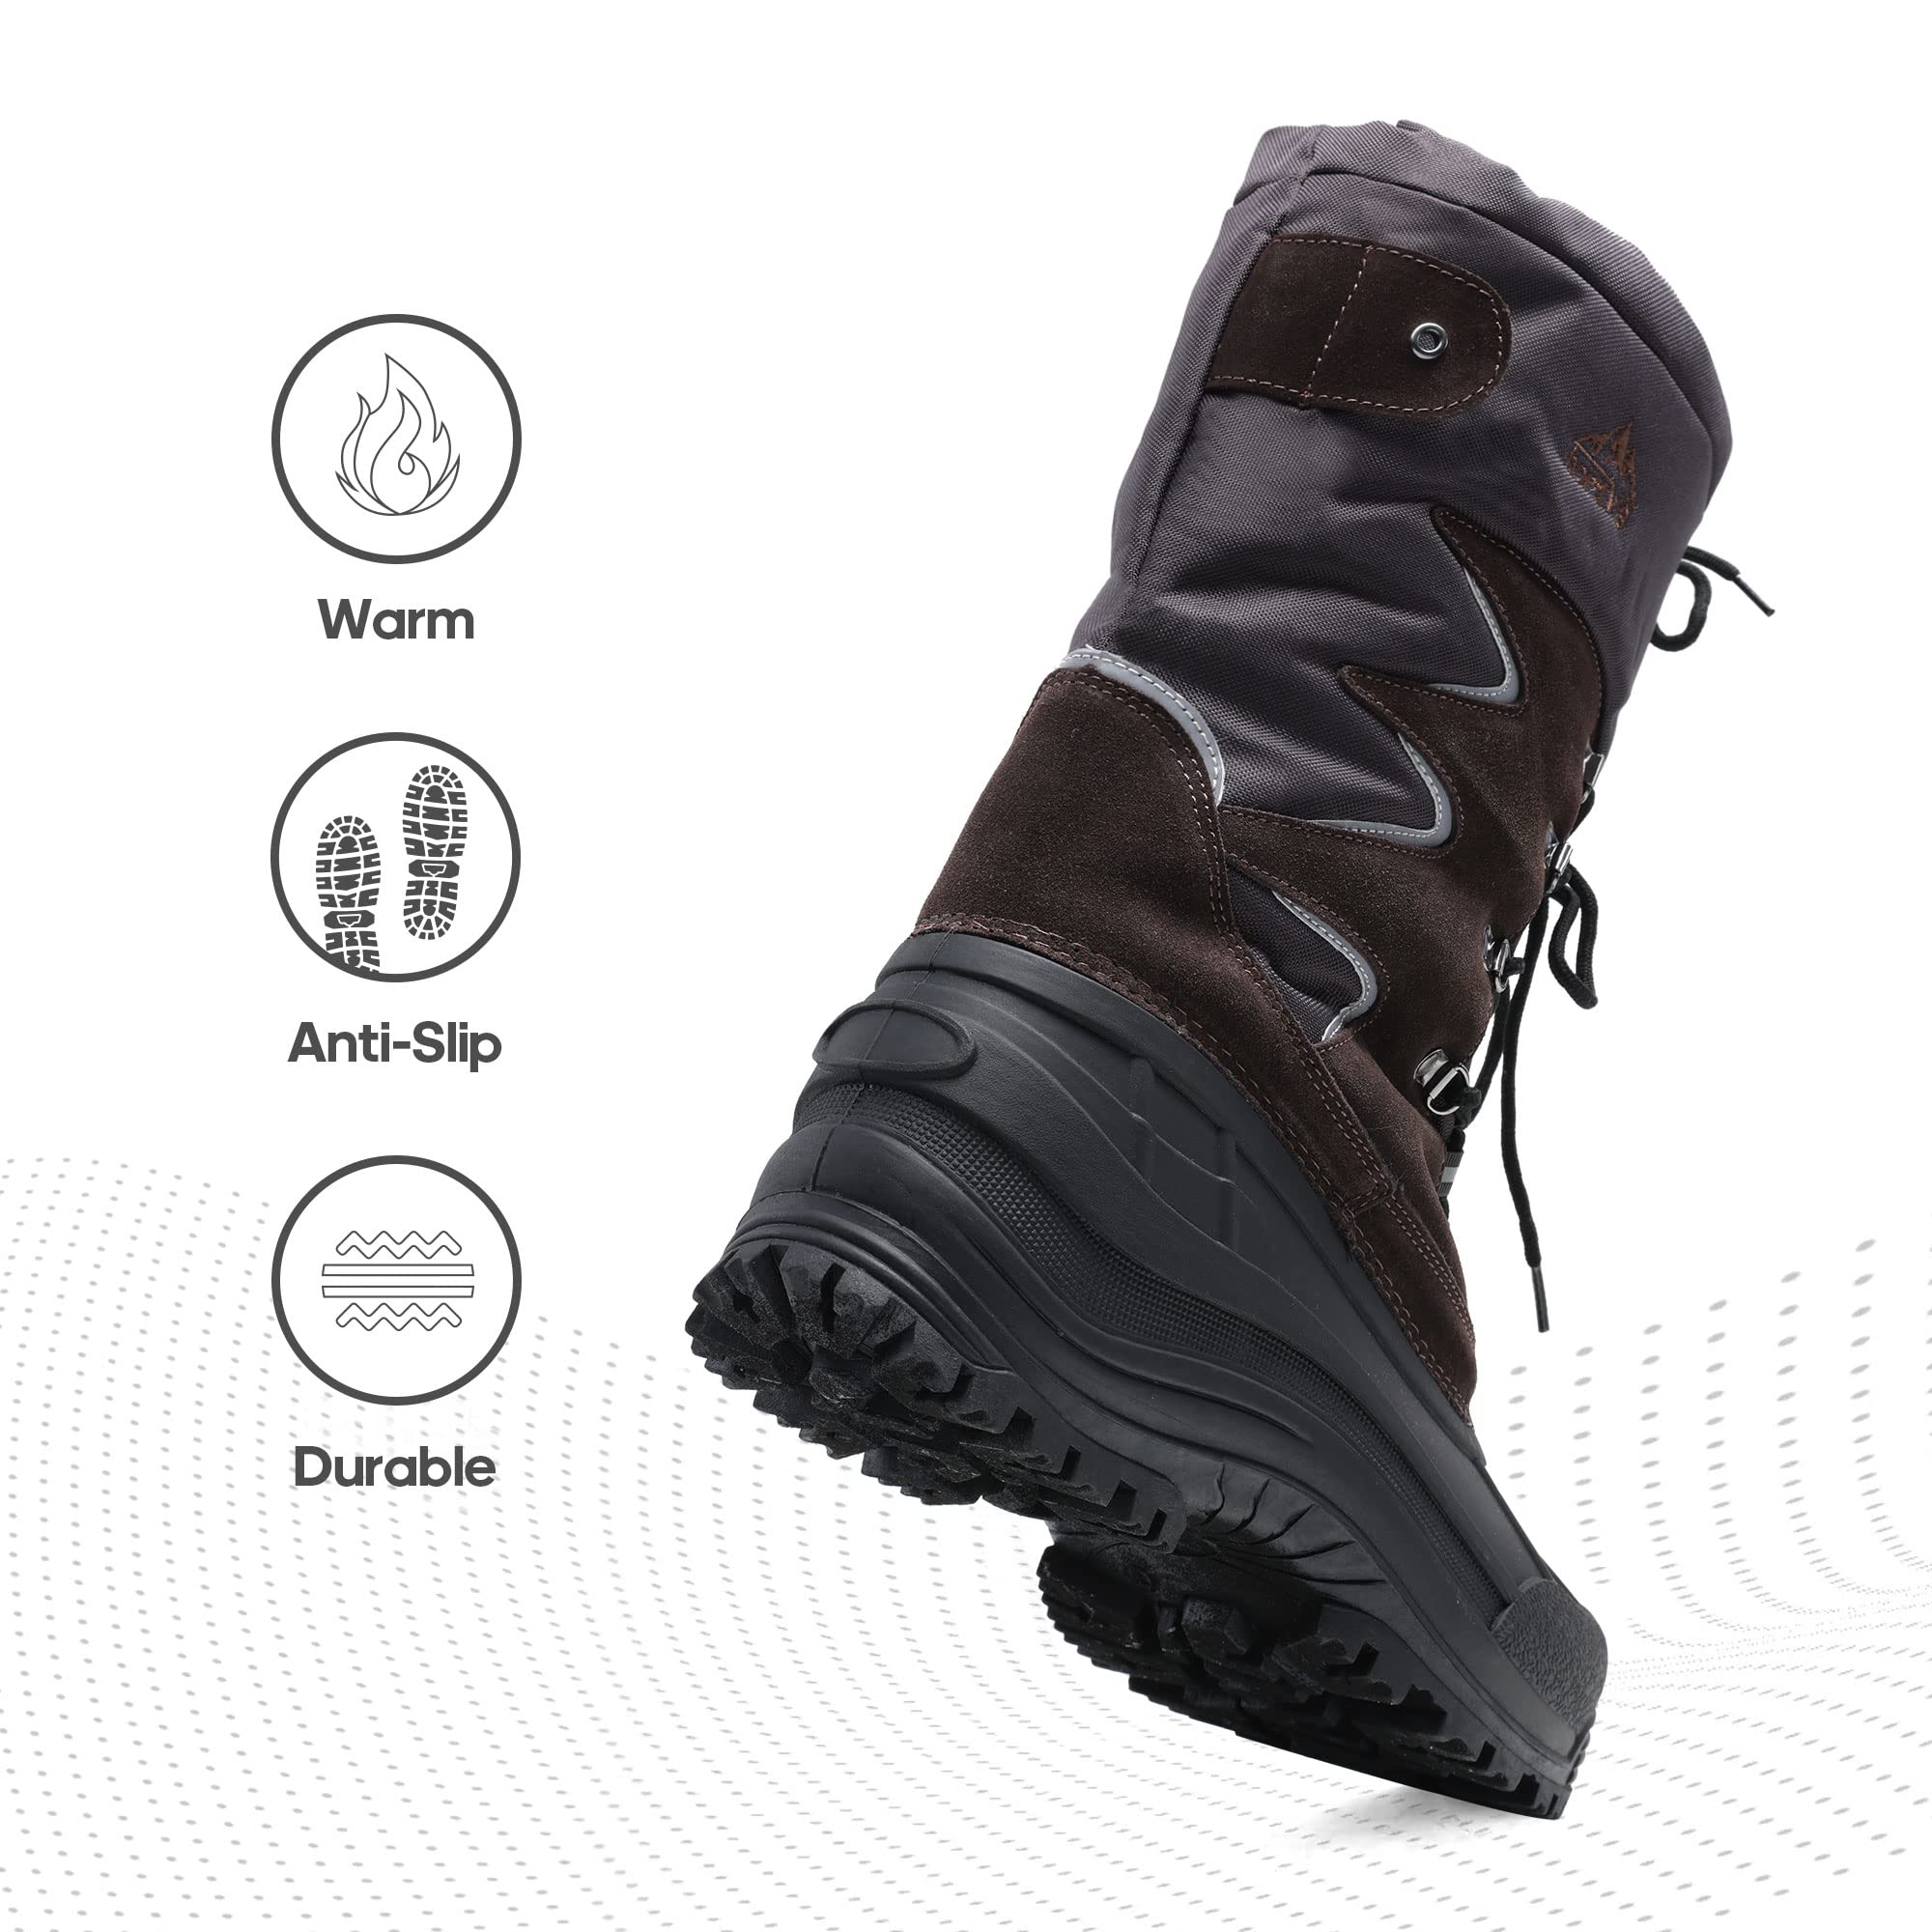 Buy NORTIV 8 Men's Waterproof Hiking Winter Snow Boots Insulated